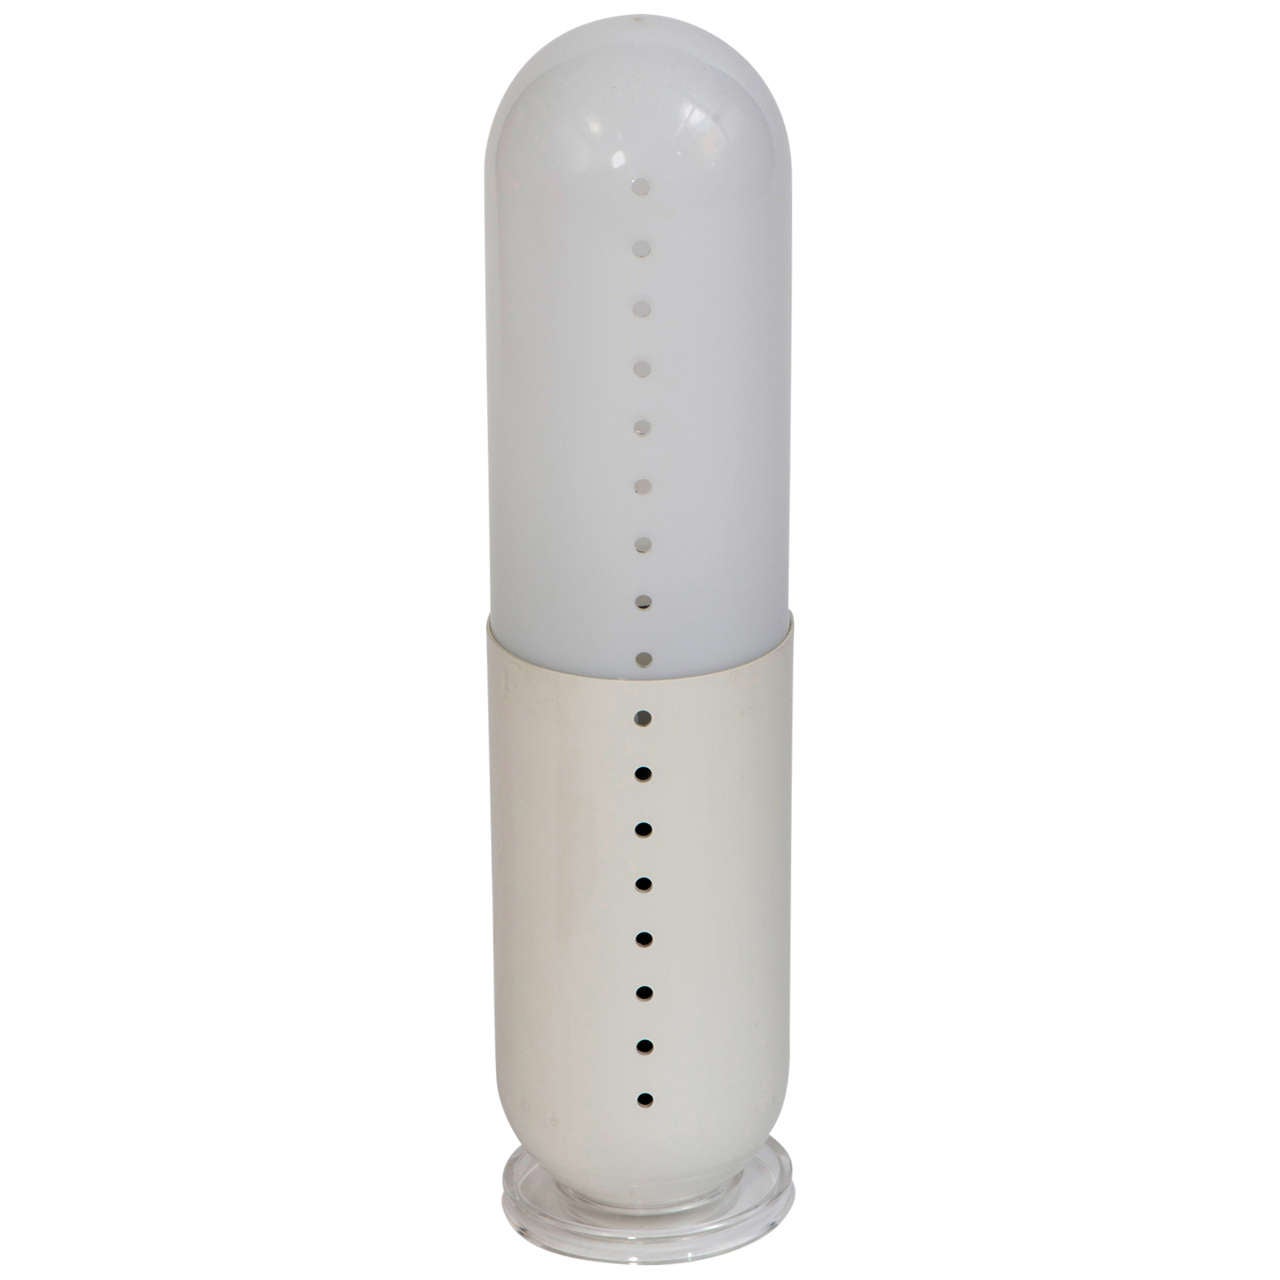 A Pillola Lamp designed by Cesare Casati and Emanuele Ponzio for “Ponteur”.